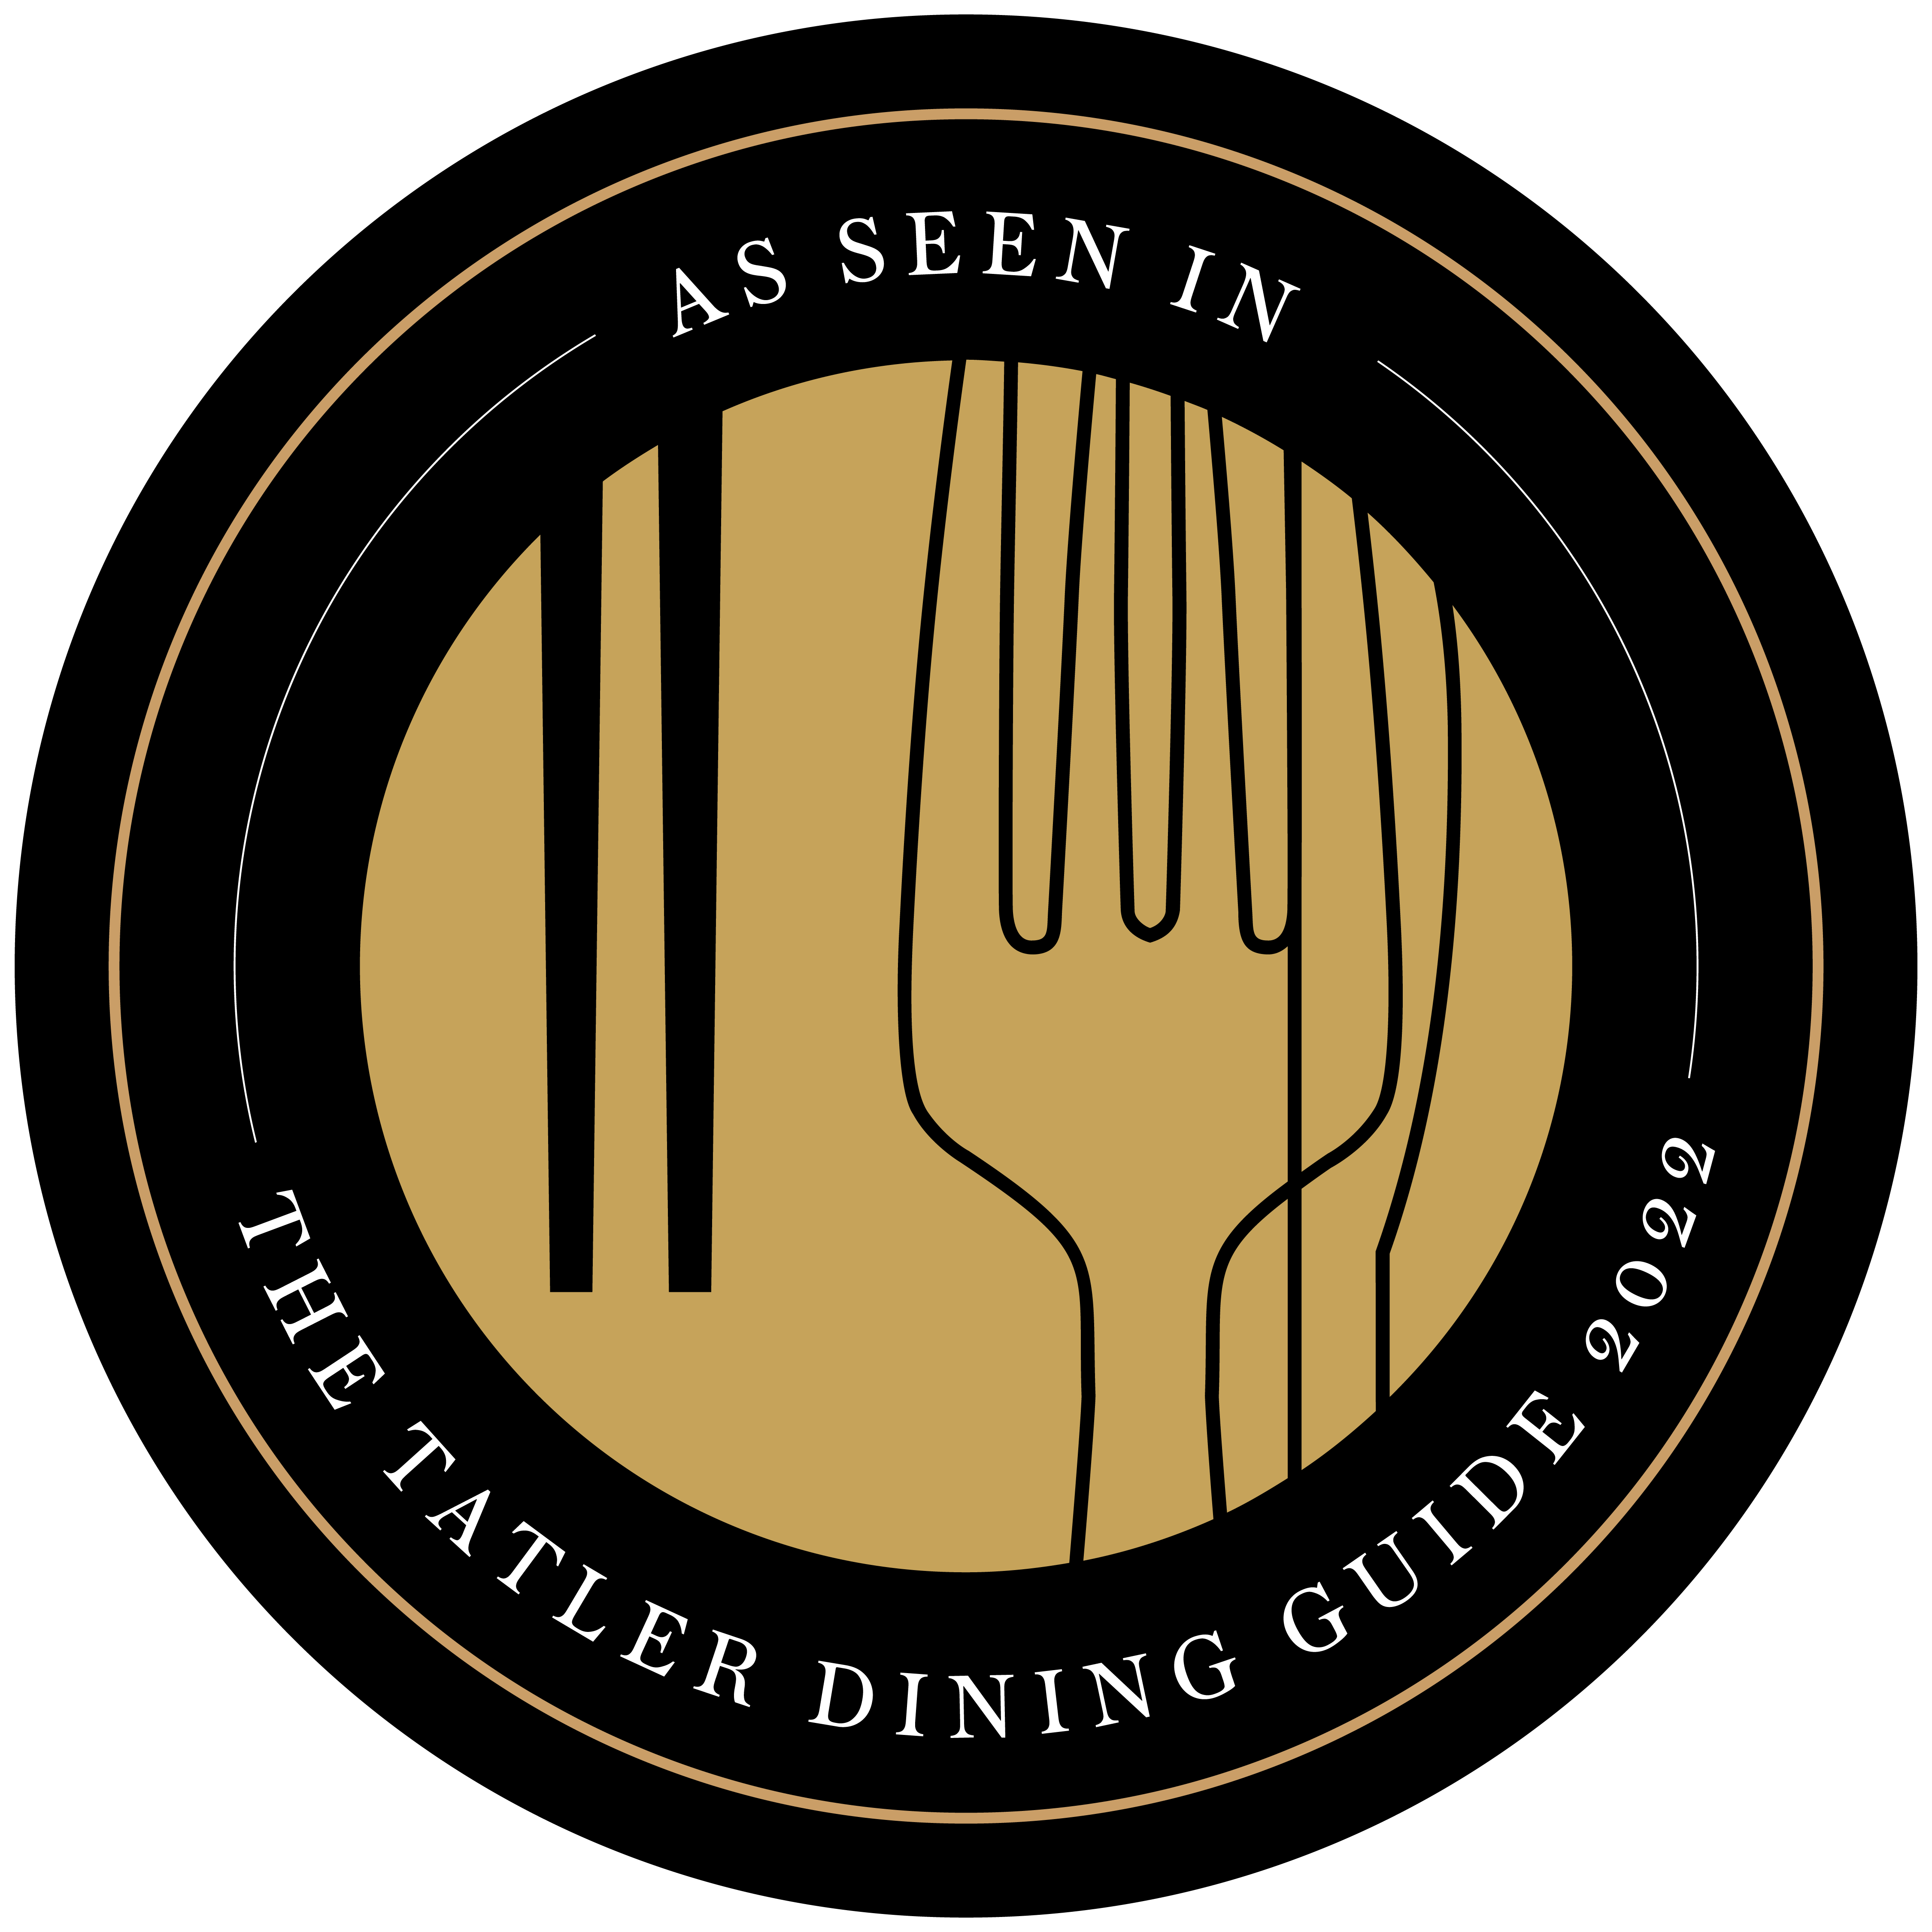 Listed in Tatler Dining Guide 2022